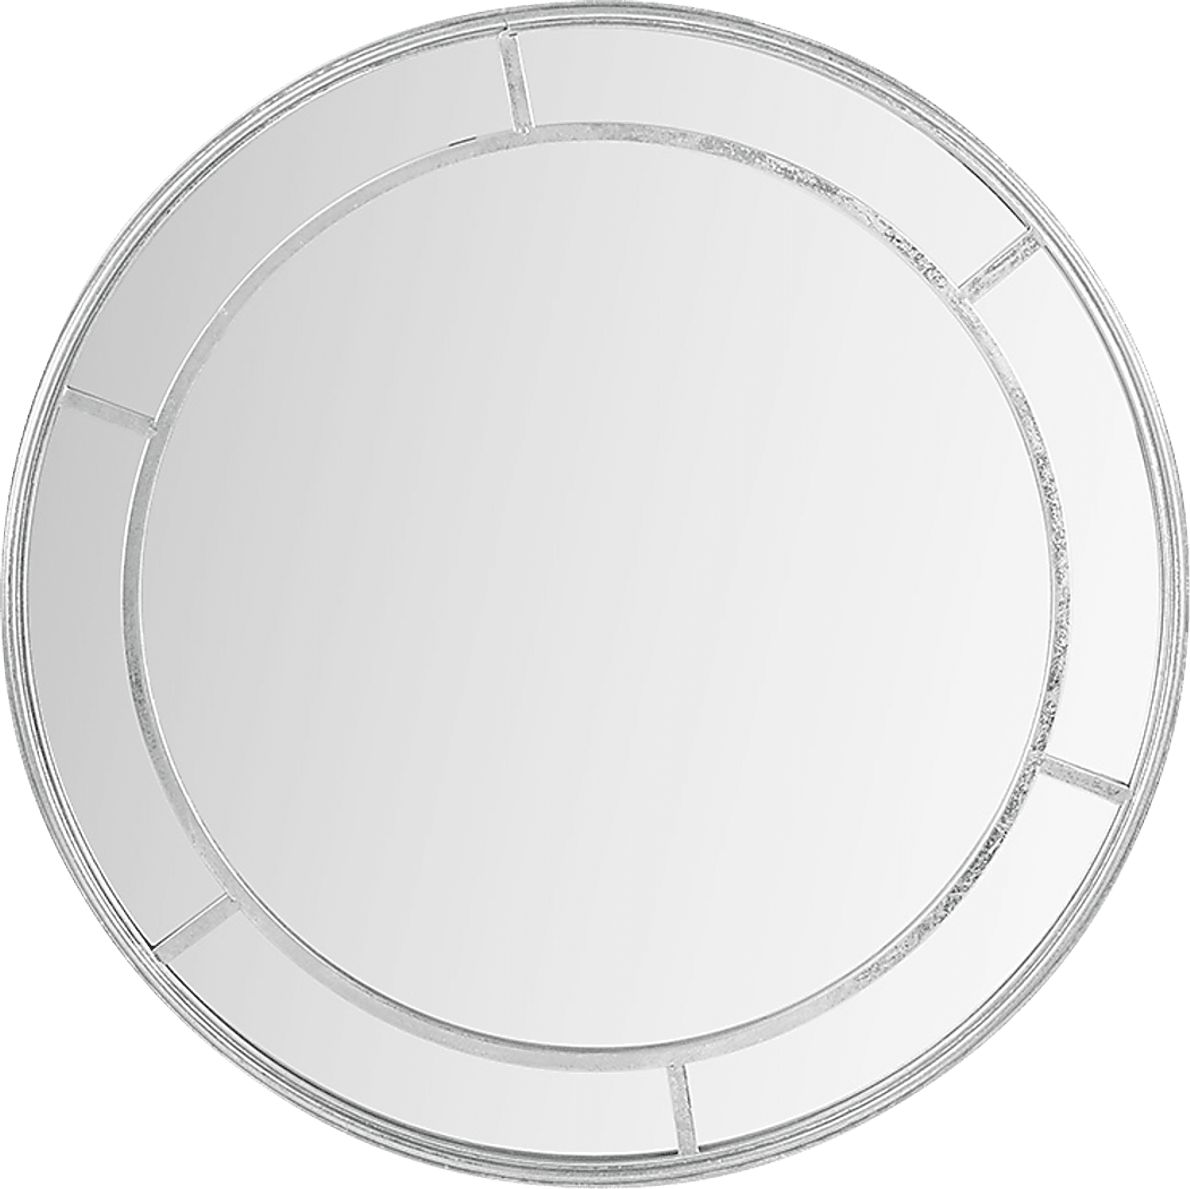 Defremery Silver Round Wall Mirror